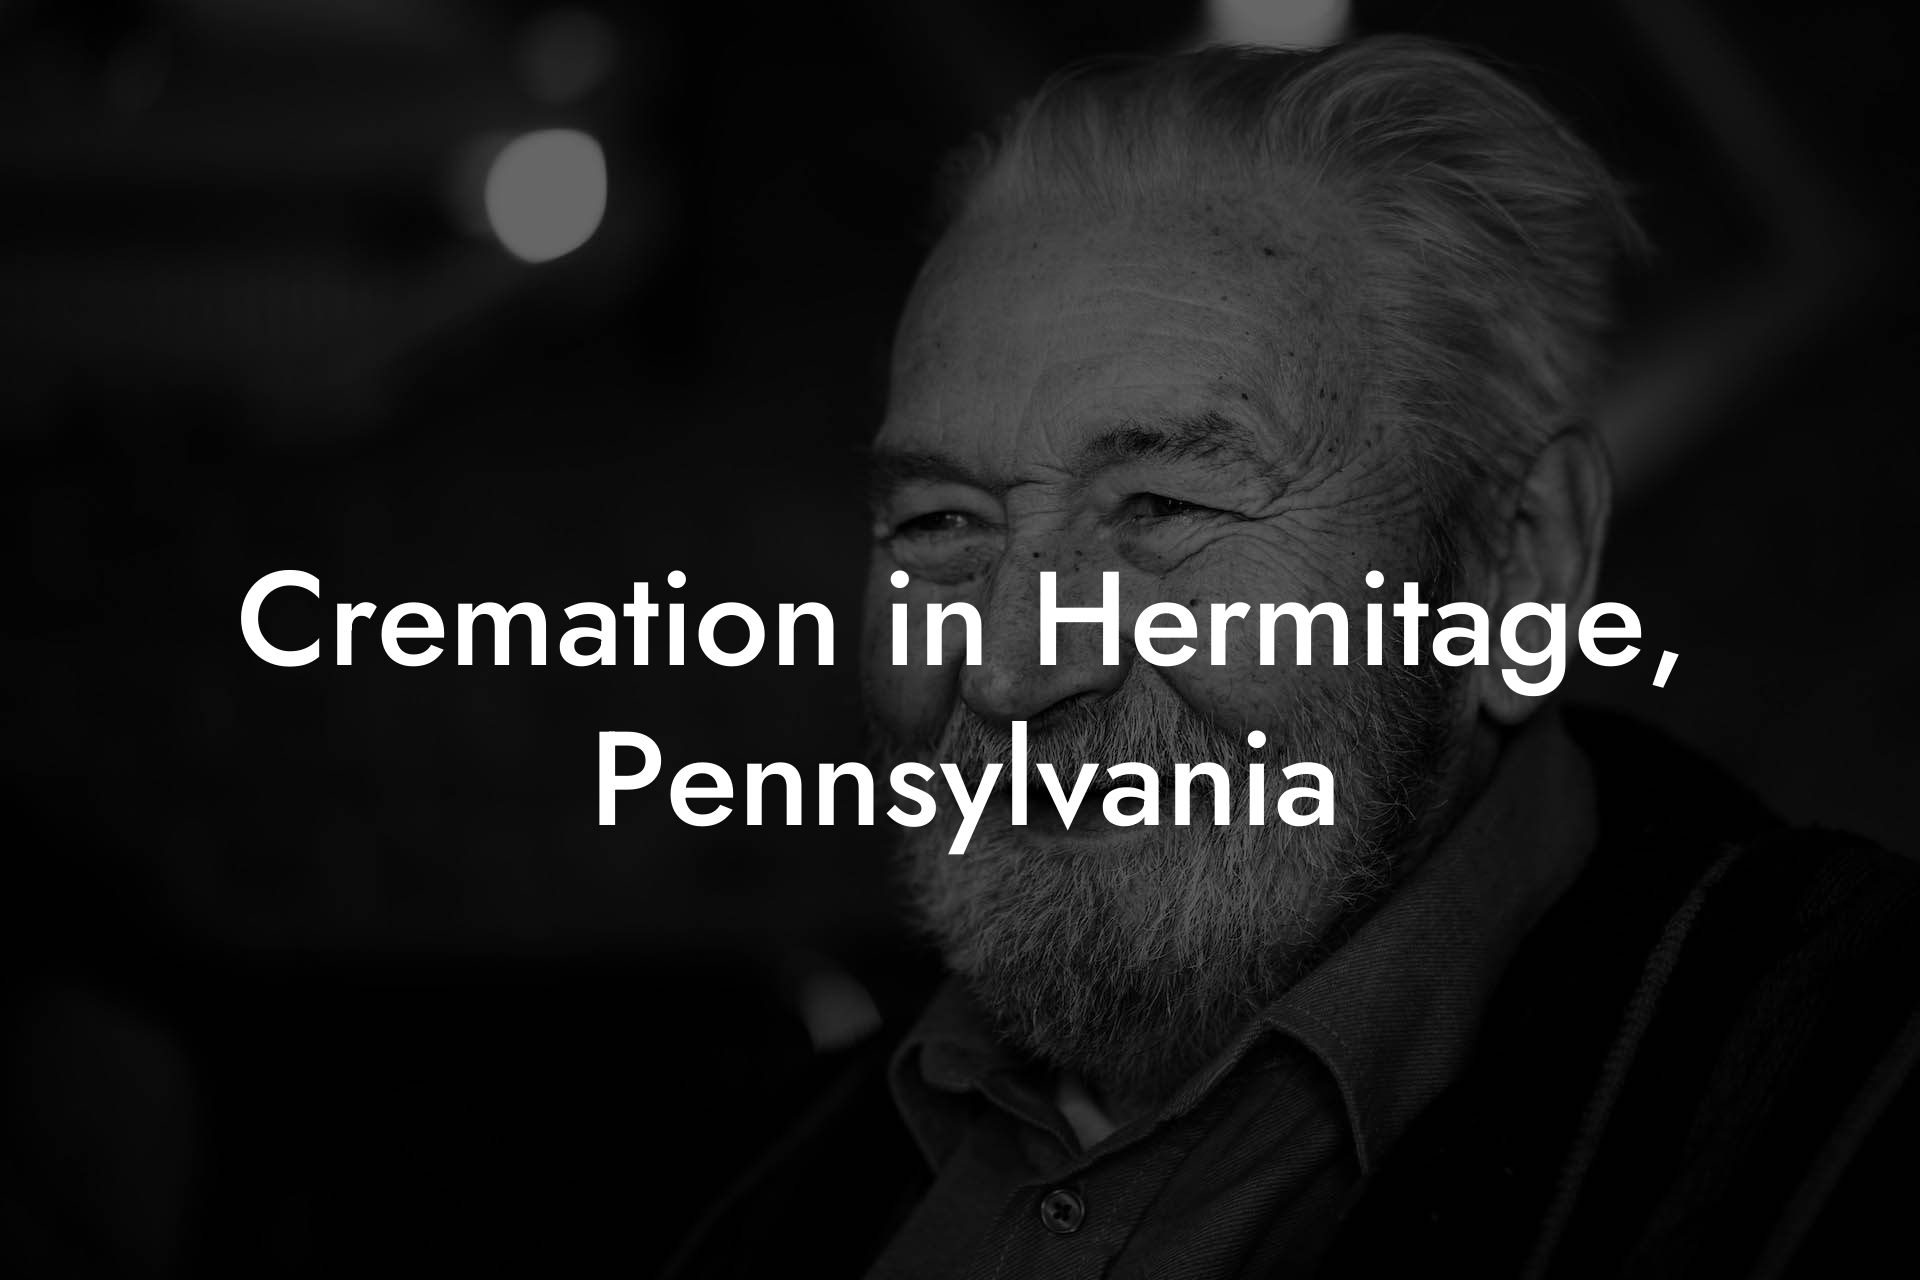 Cremation in Hermitage, Pennsylvania